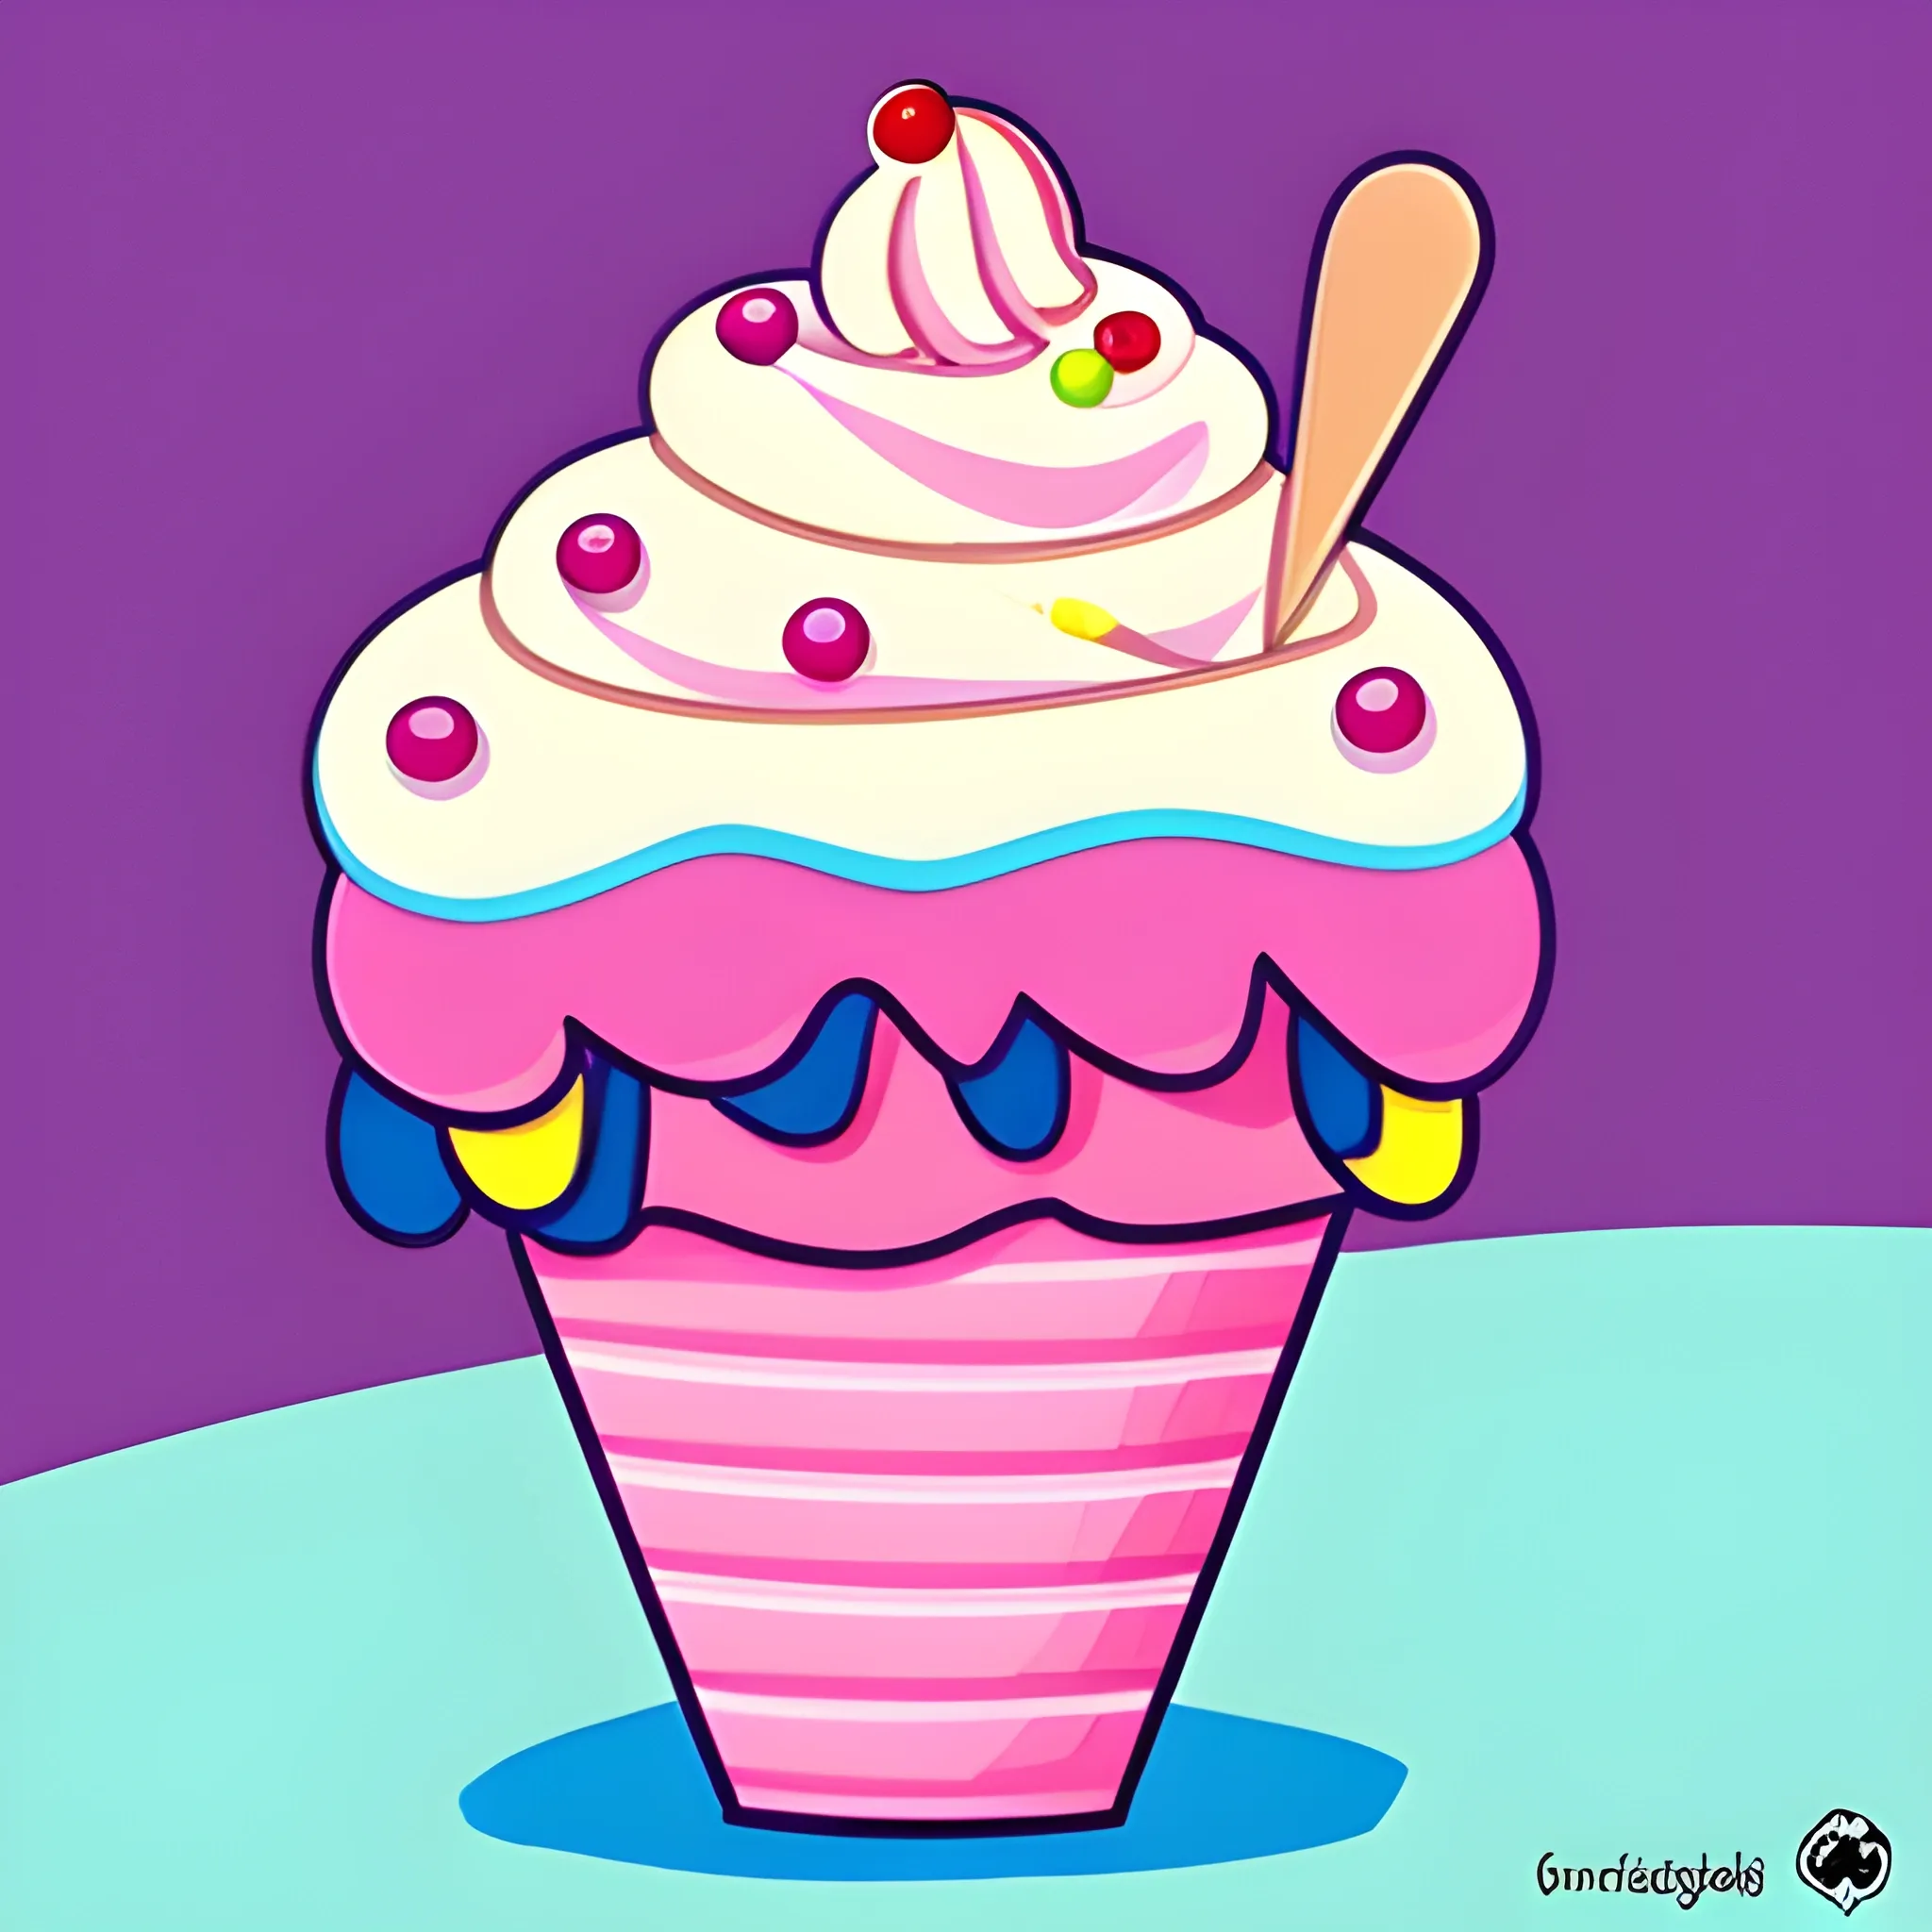 cartoon ice cream gelato, sprinkles, dripping ice cream, cherry on top,
illustratiion